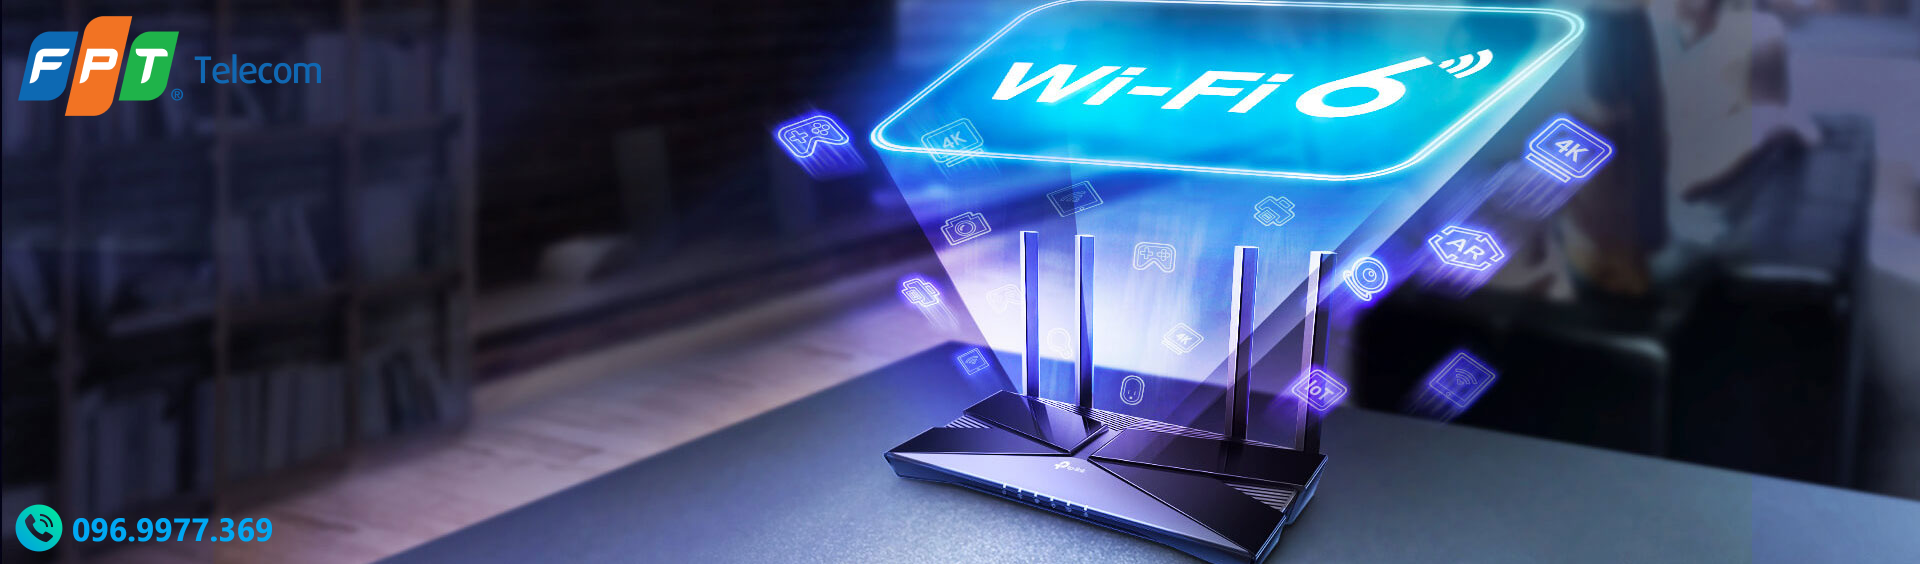 wi-fi-6-banner